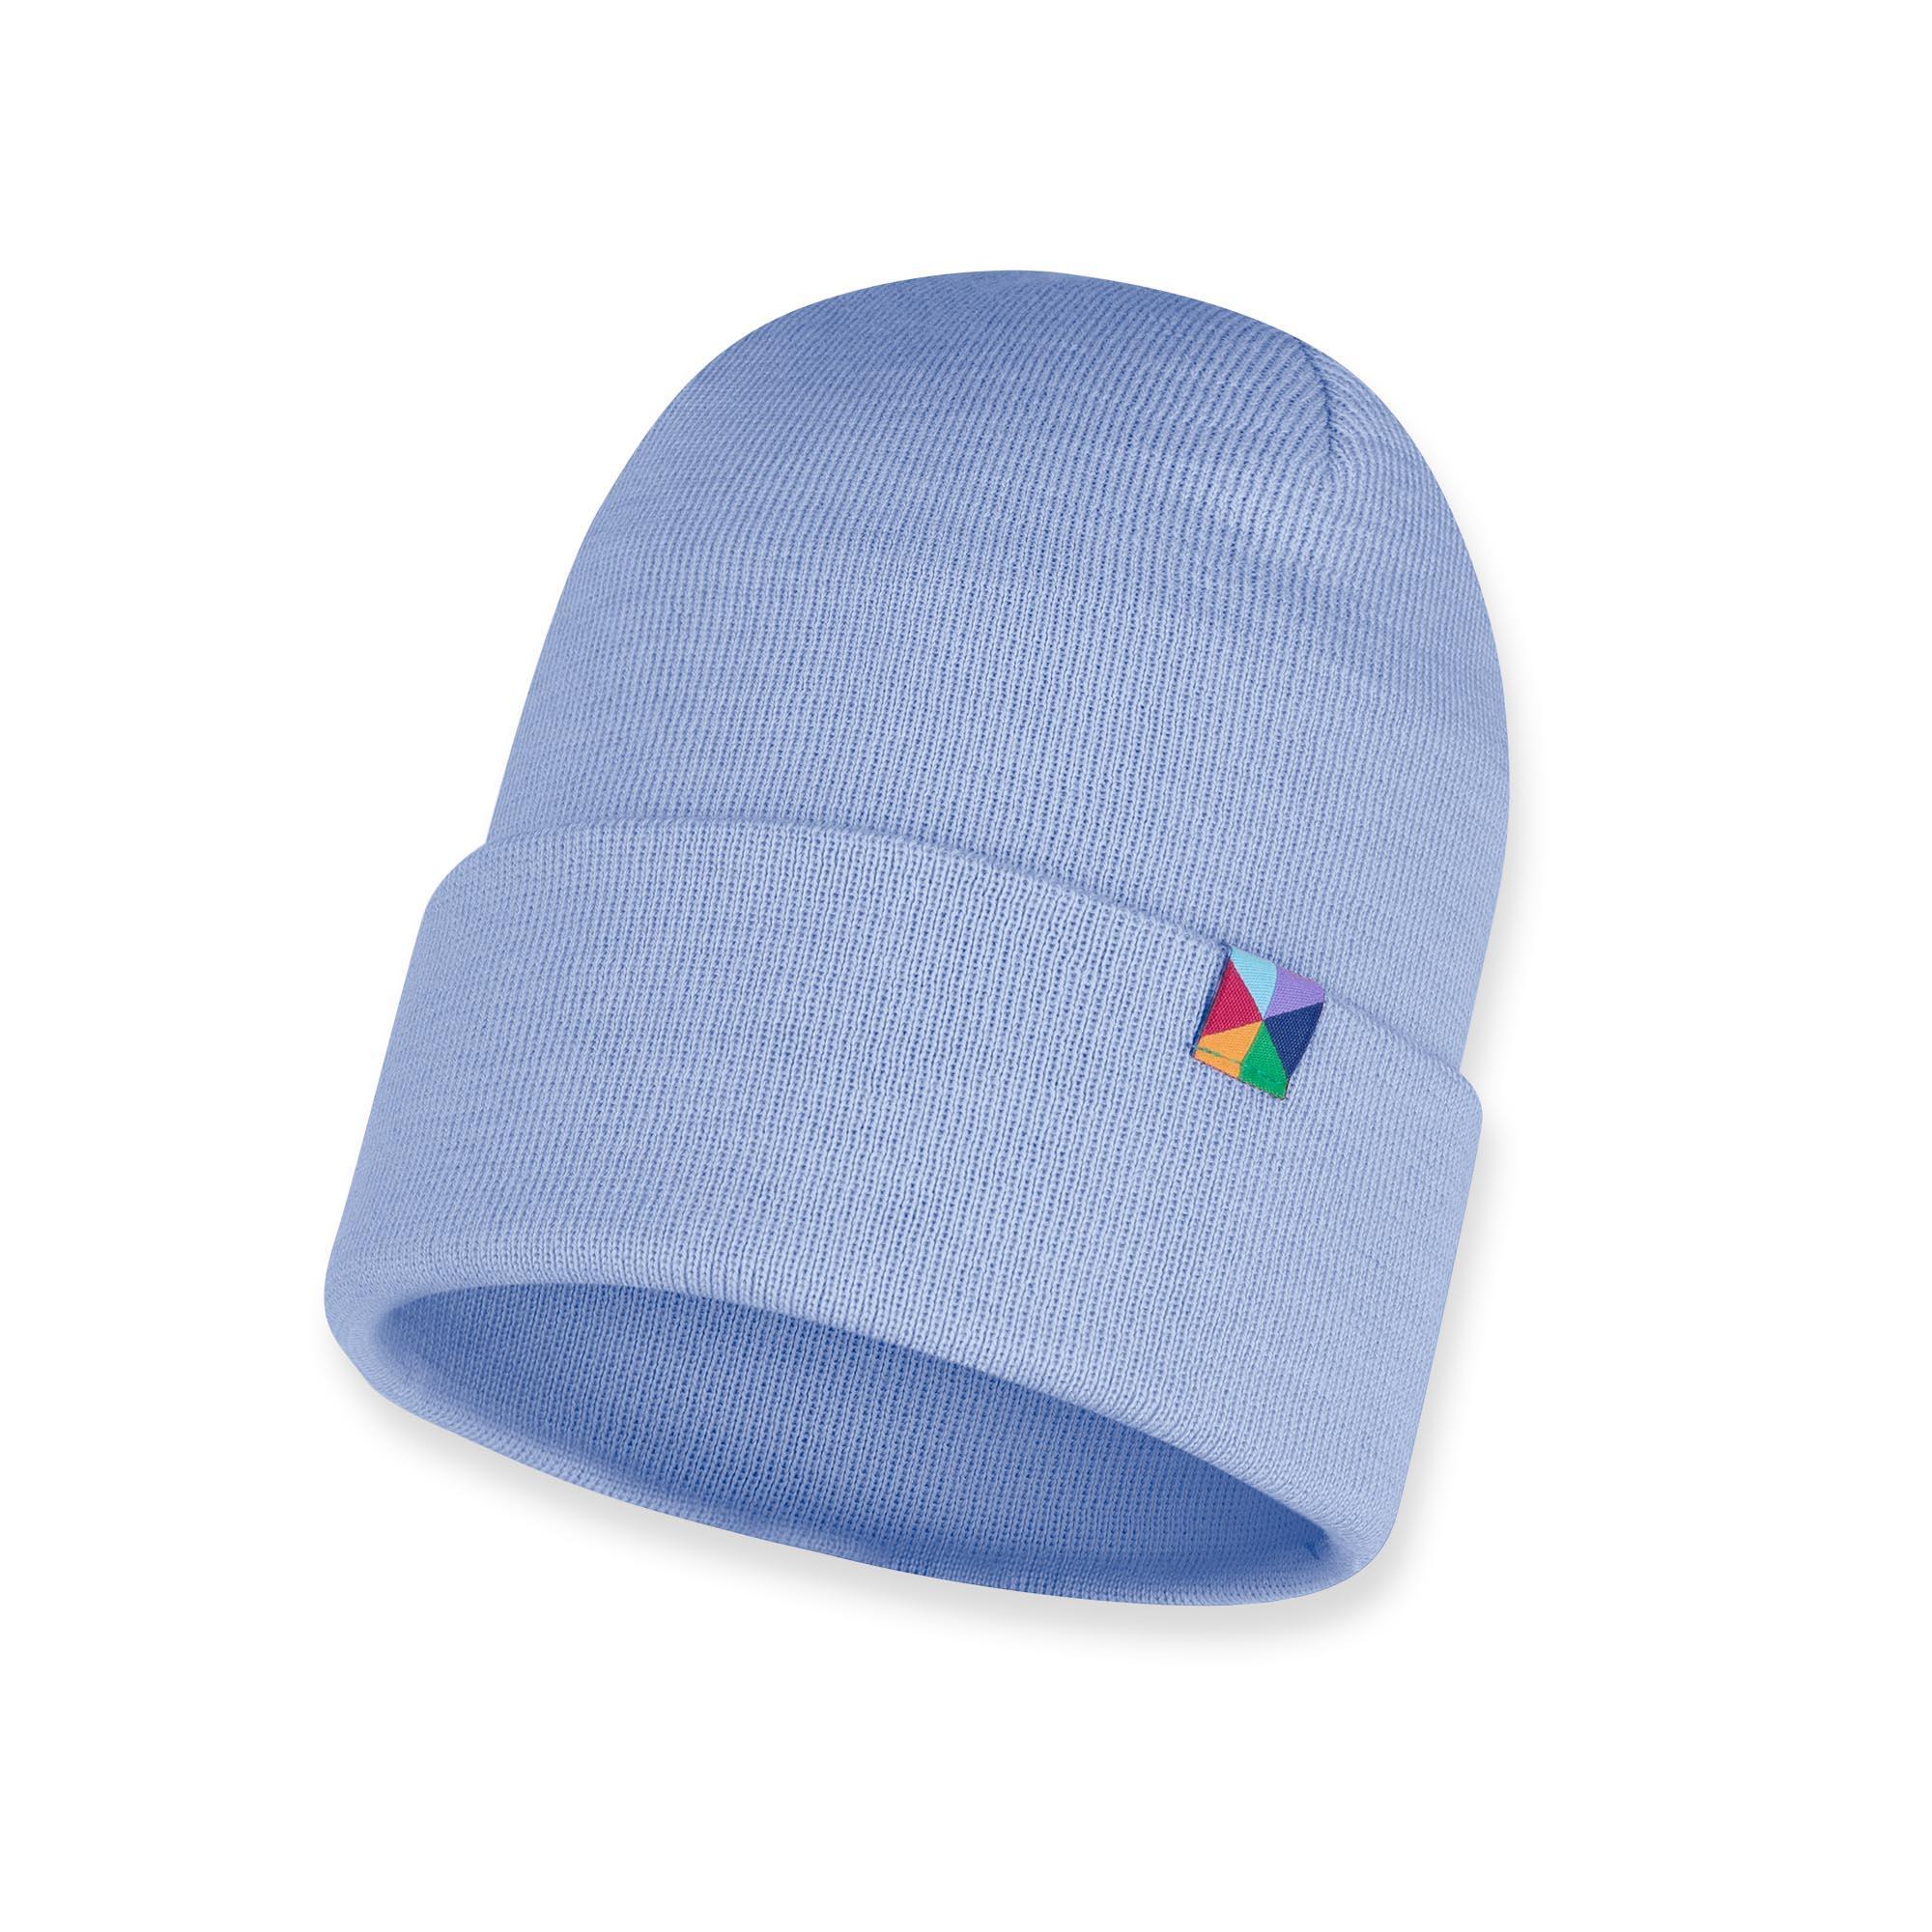 Błękitna czapka z wełny merino o drobnym splocie